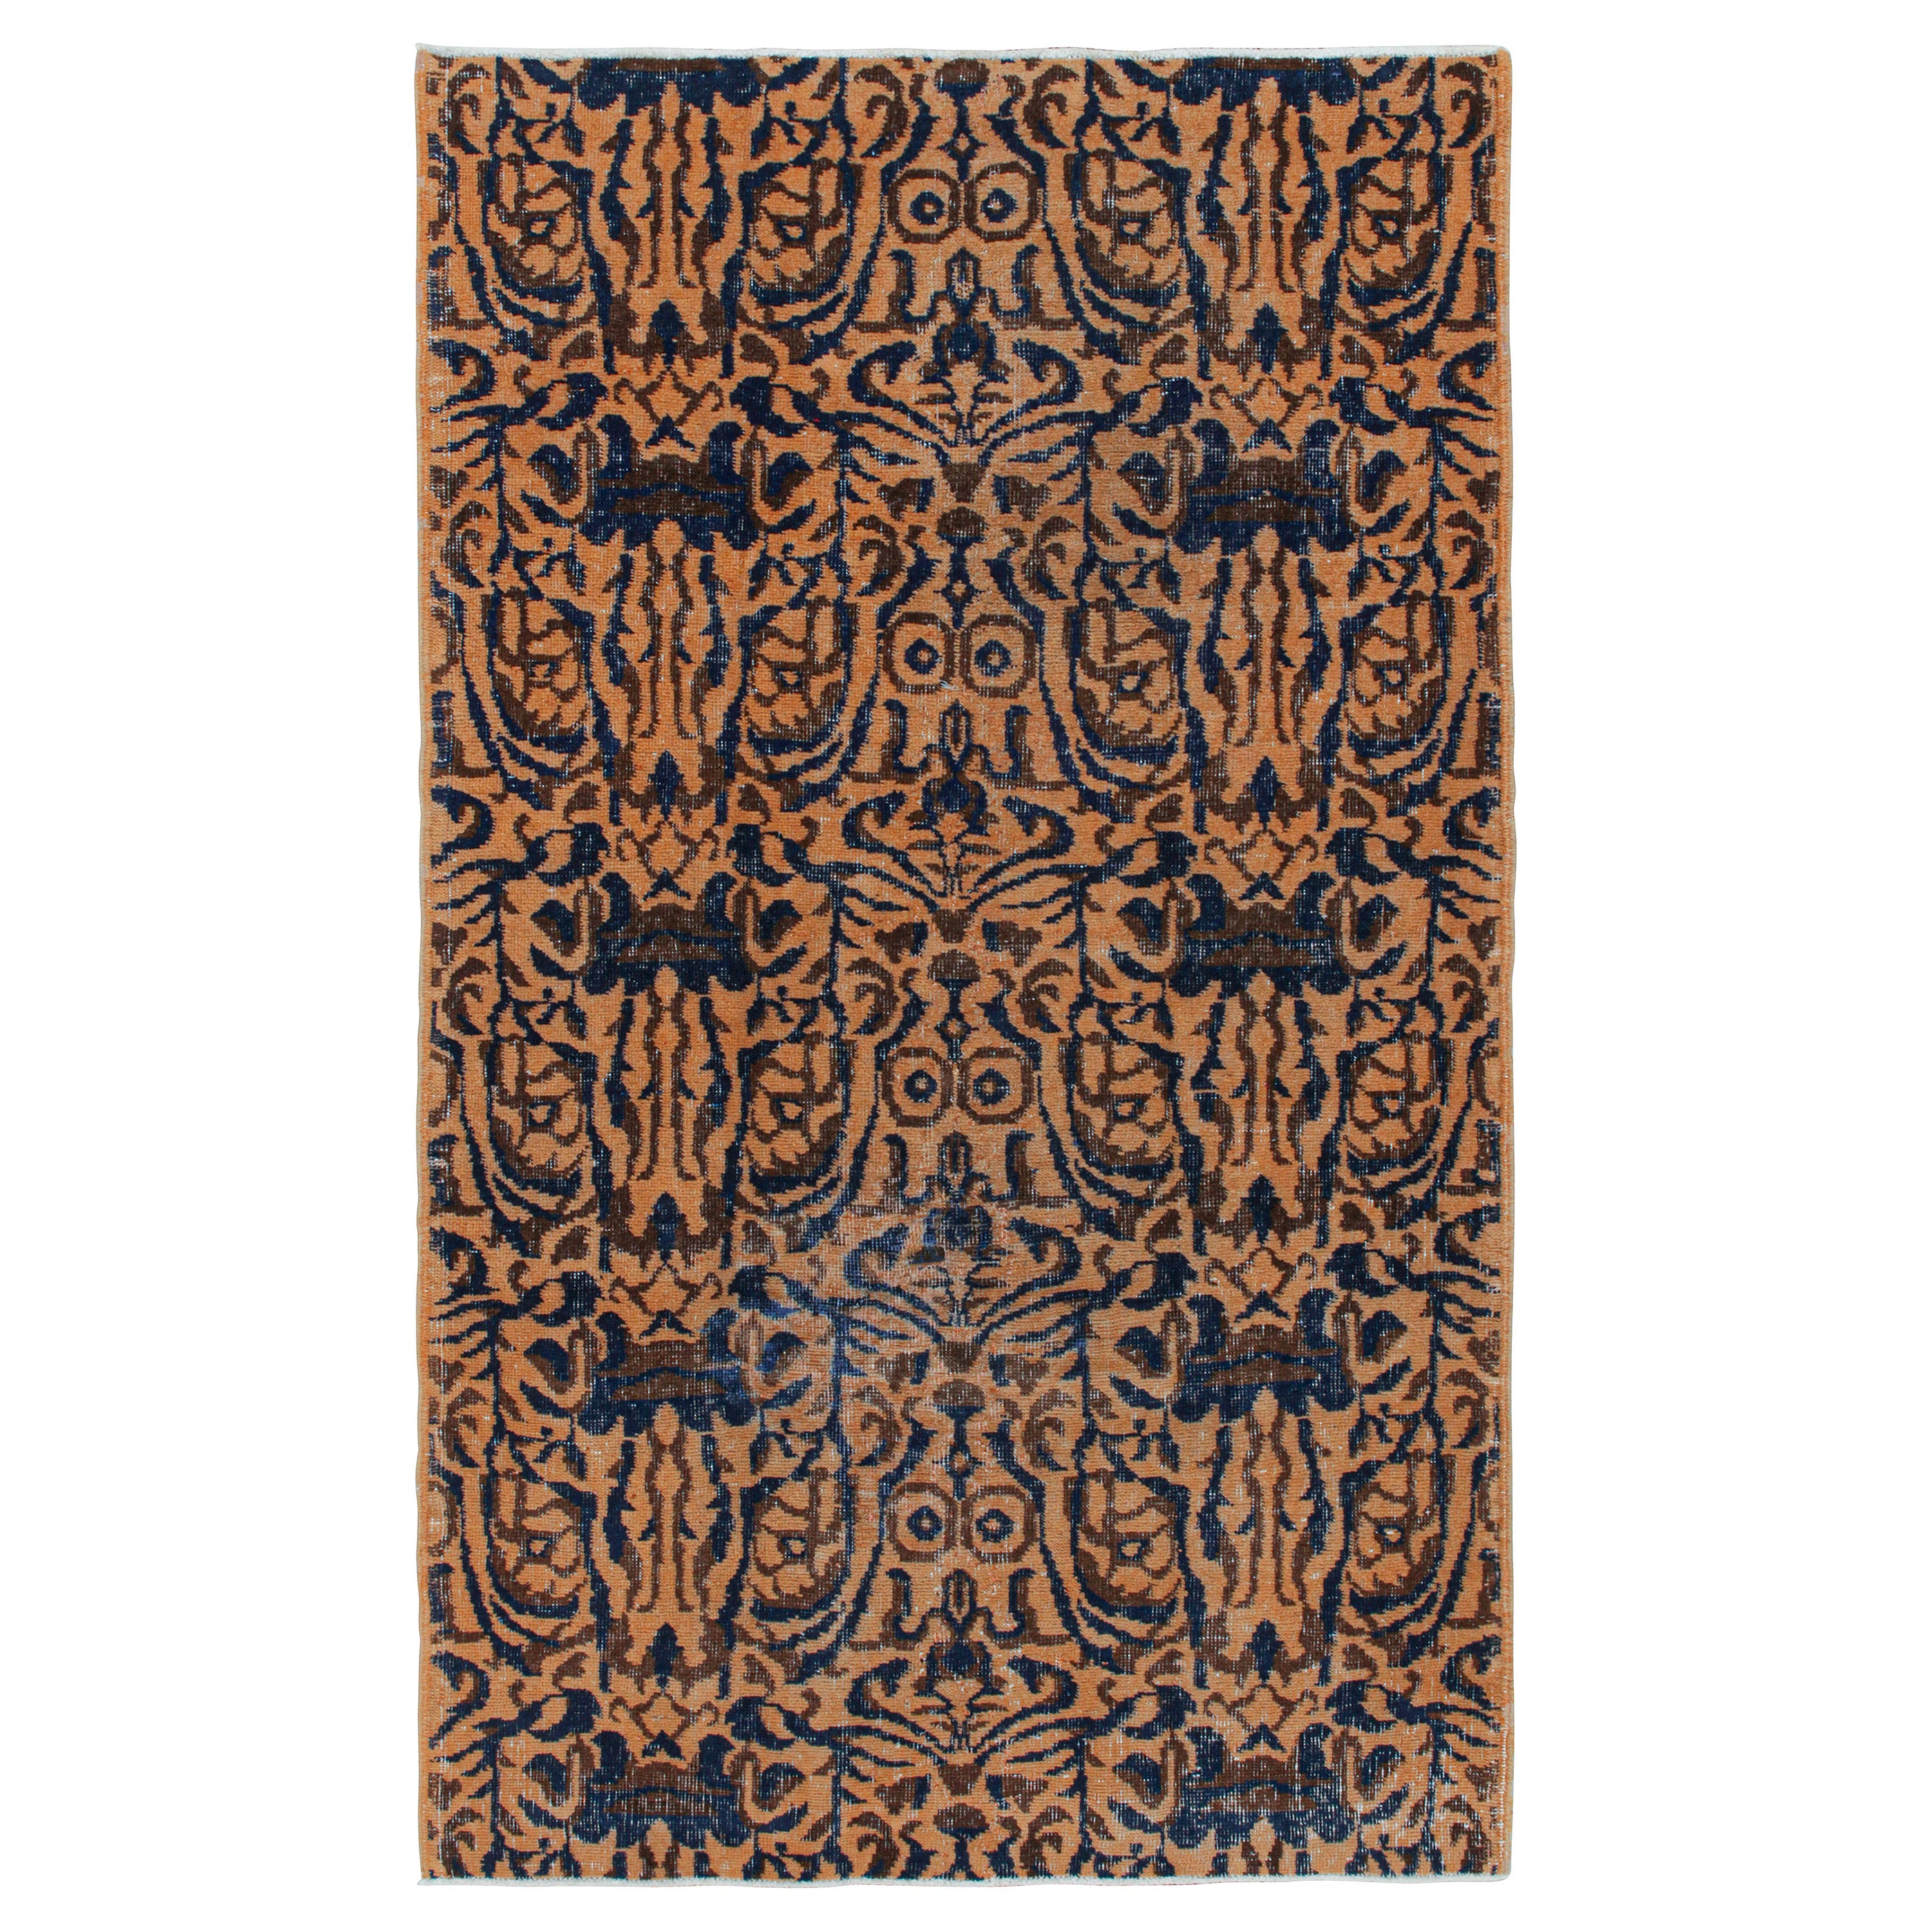 Vintage Zeki Müren Rug in Orange with Brown and Blue Patterns by Rug & Kilim